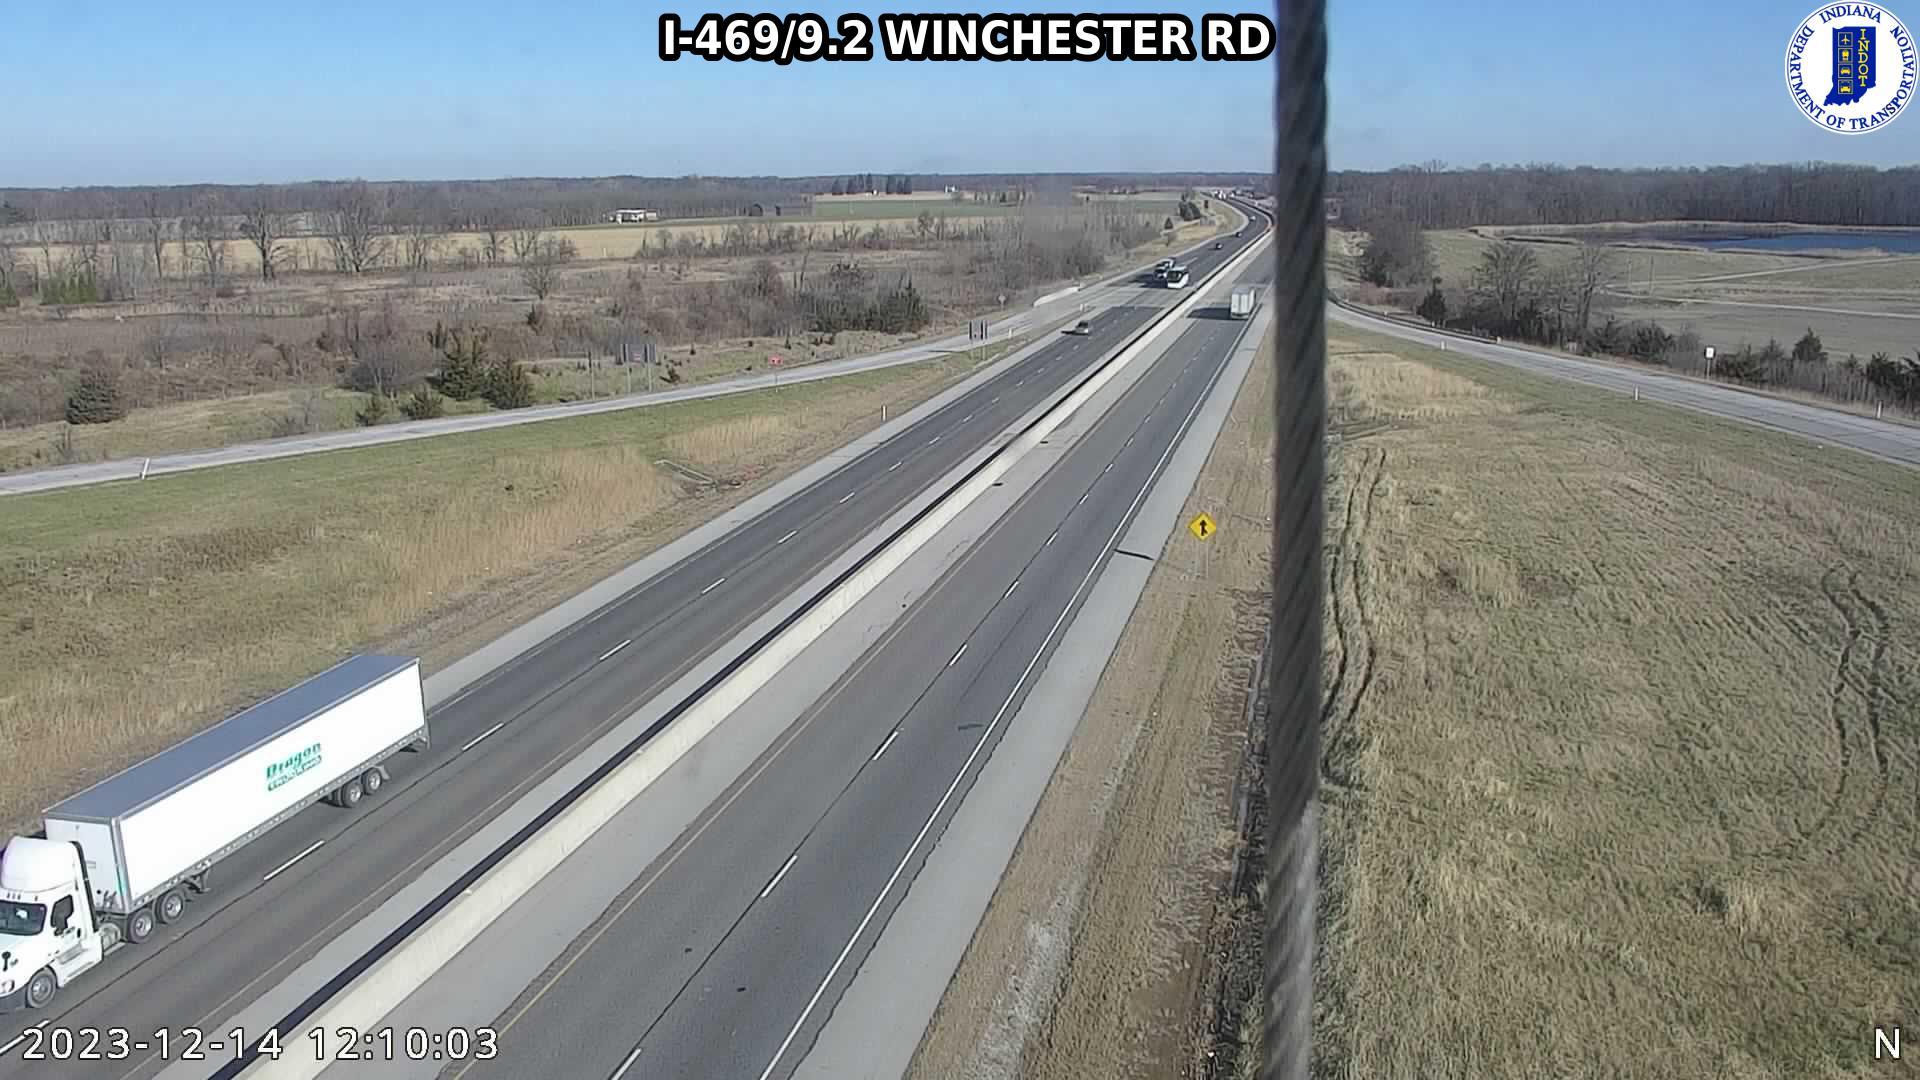 Hessen Cassel: I-469: I-469/9.2 WINCHESTER RD Traffic Camera